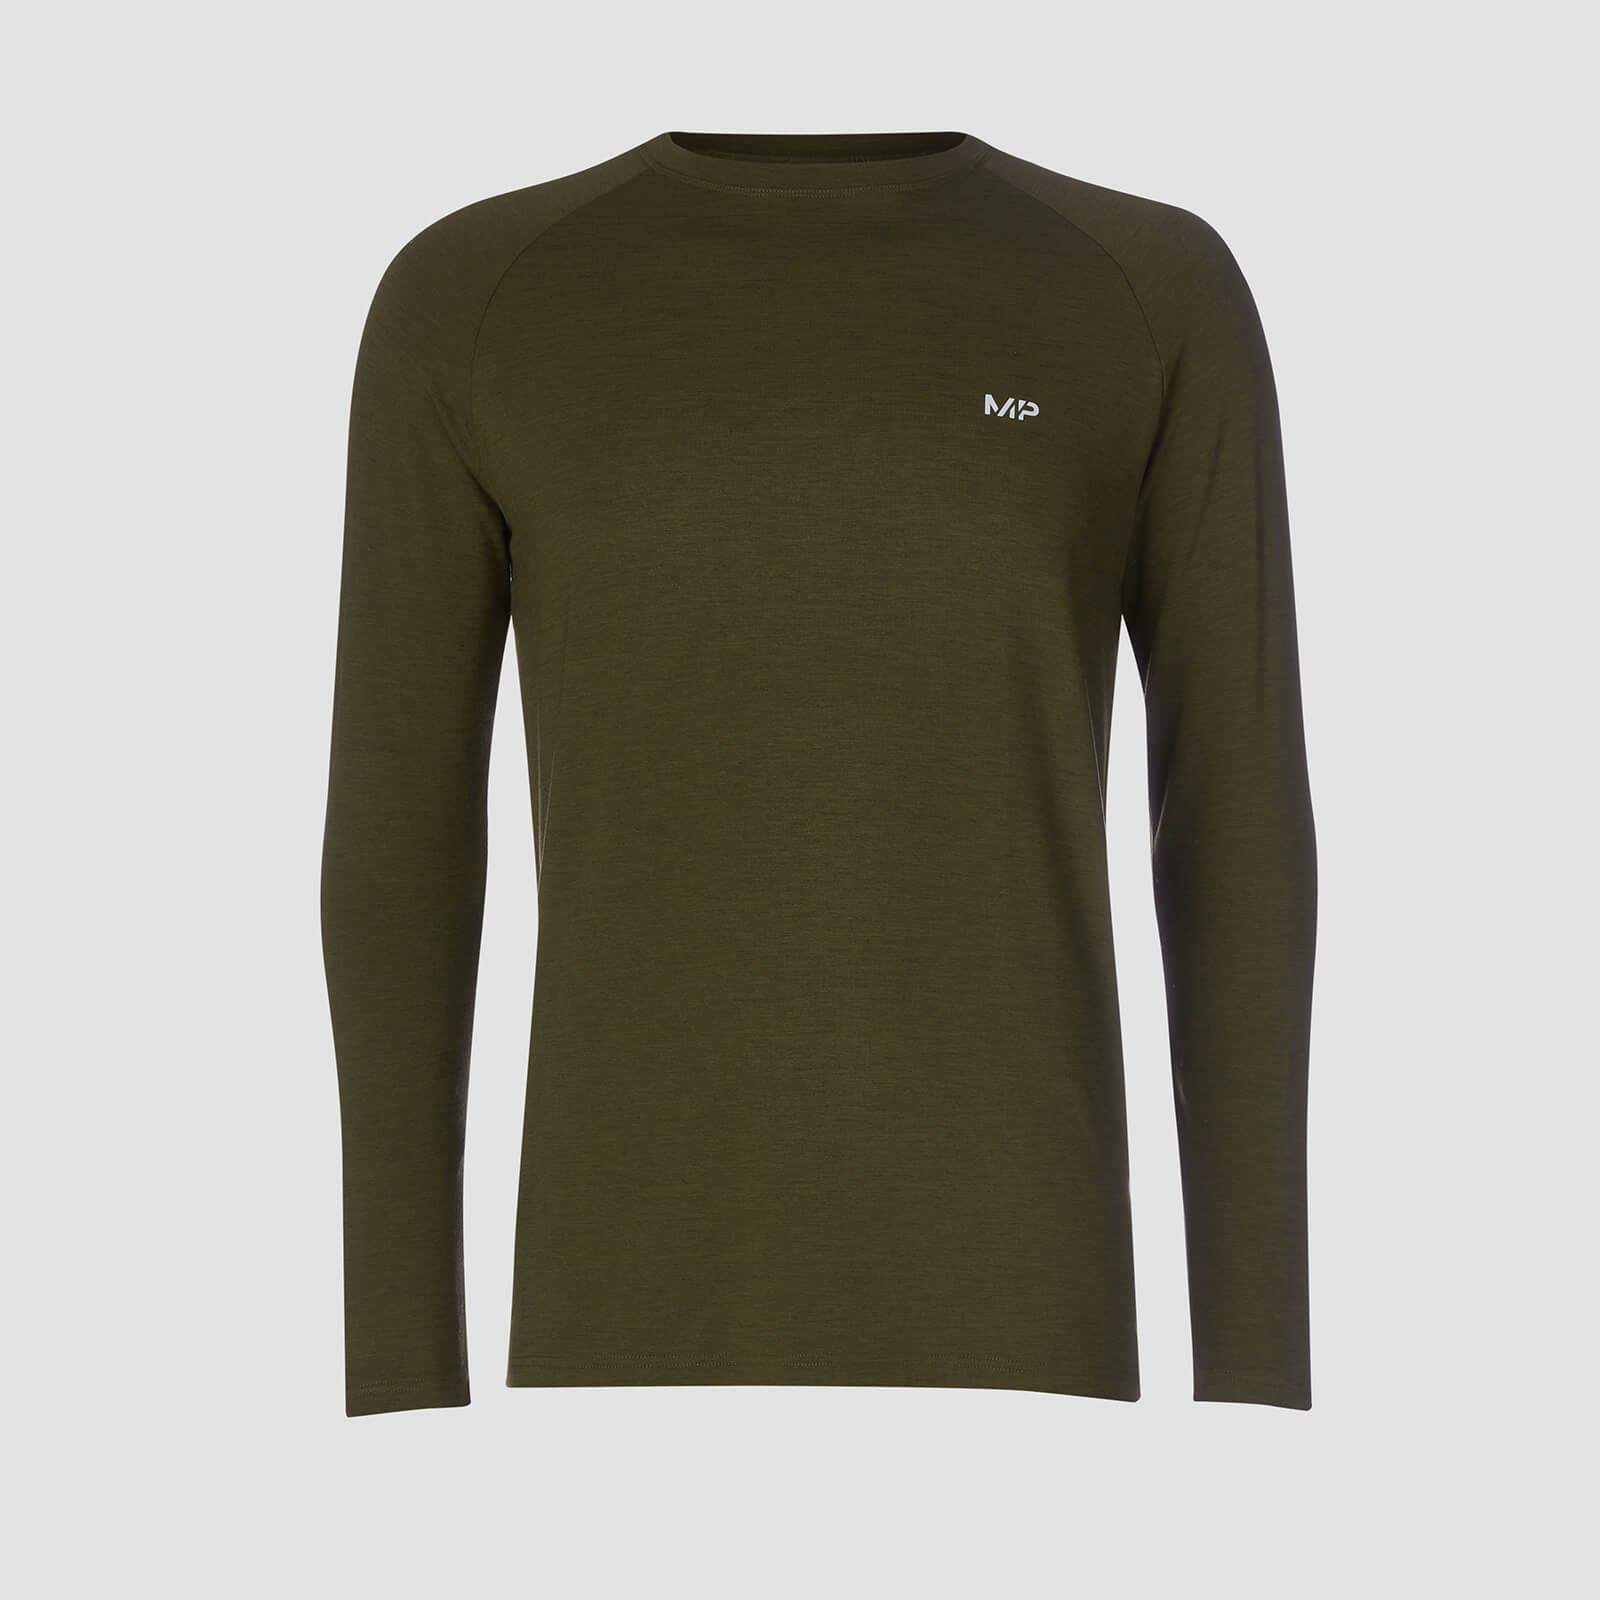 Myprotein T-shirt Performance Long Sleeve MP - Verde militare/Nero - XL